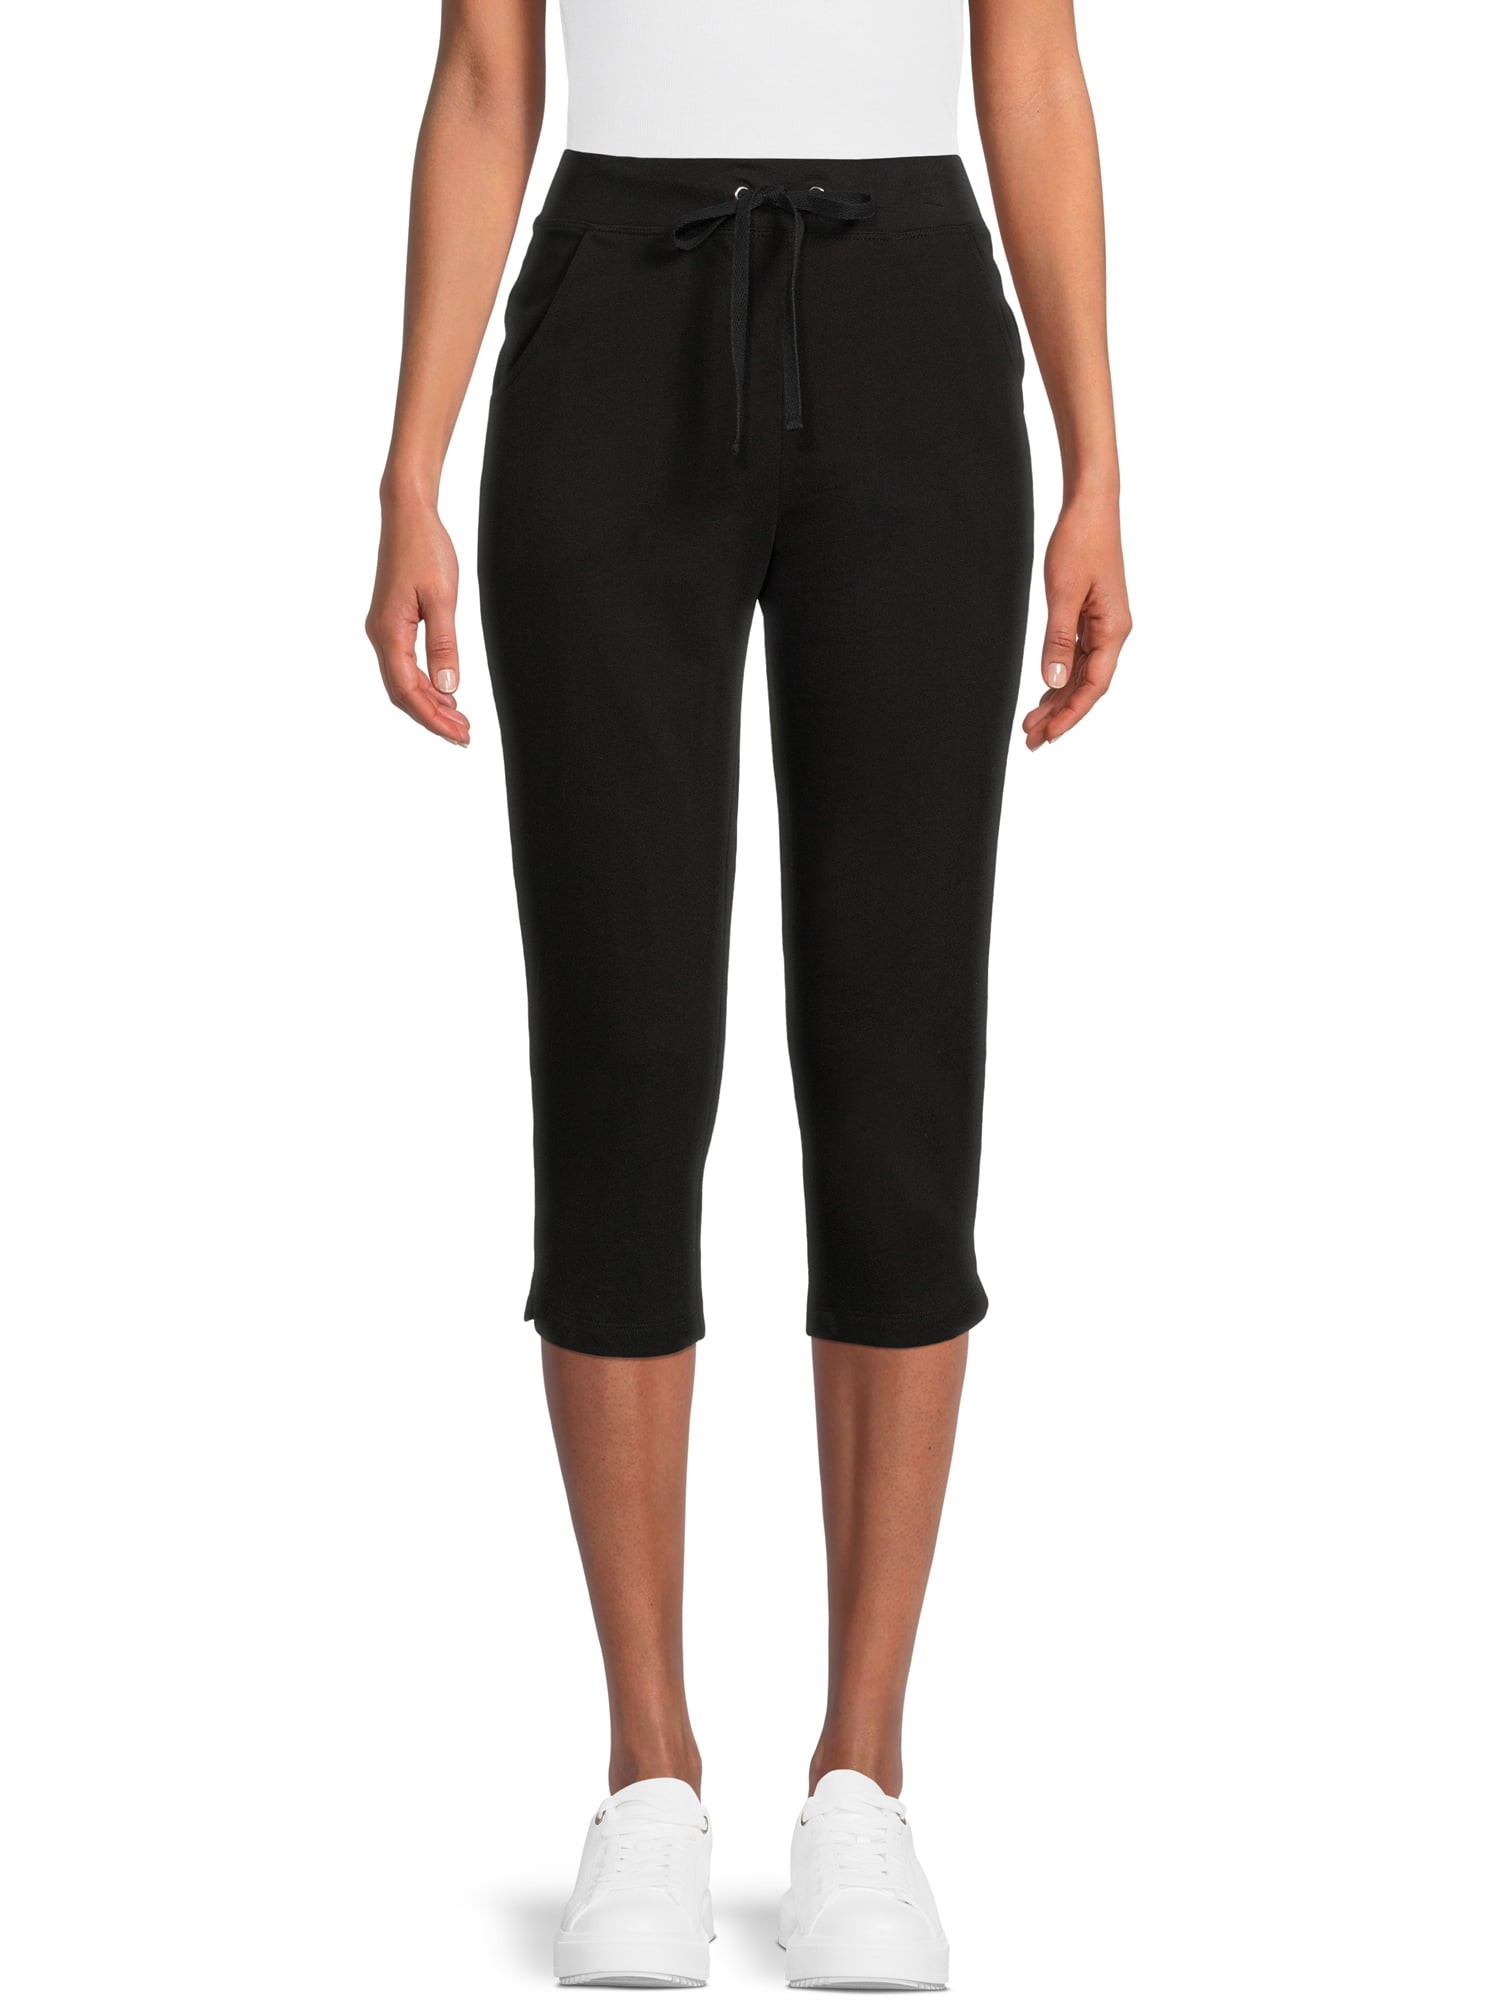 Mejores ofertas e historial de precios de RealSize Women's French Terry  Cloth Capri Pants with Pockets, XS-XXXL en